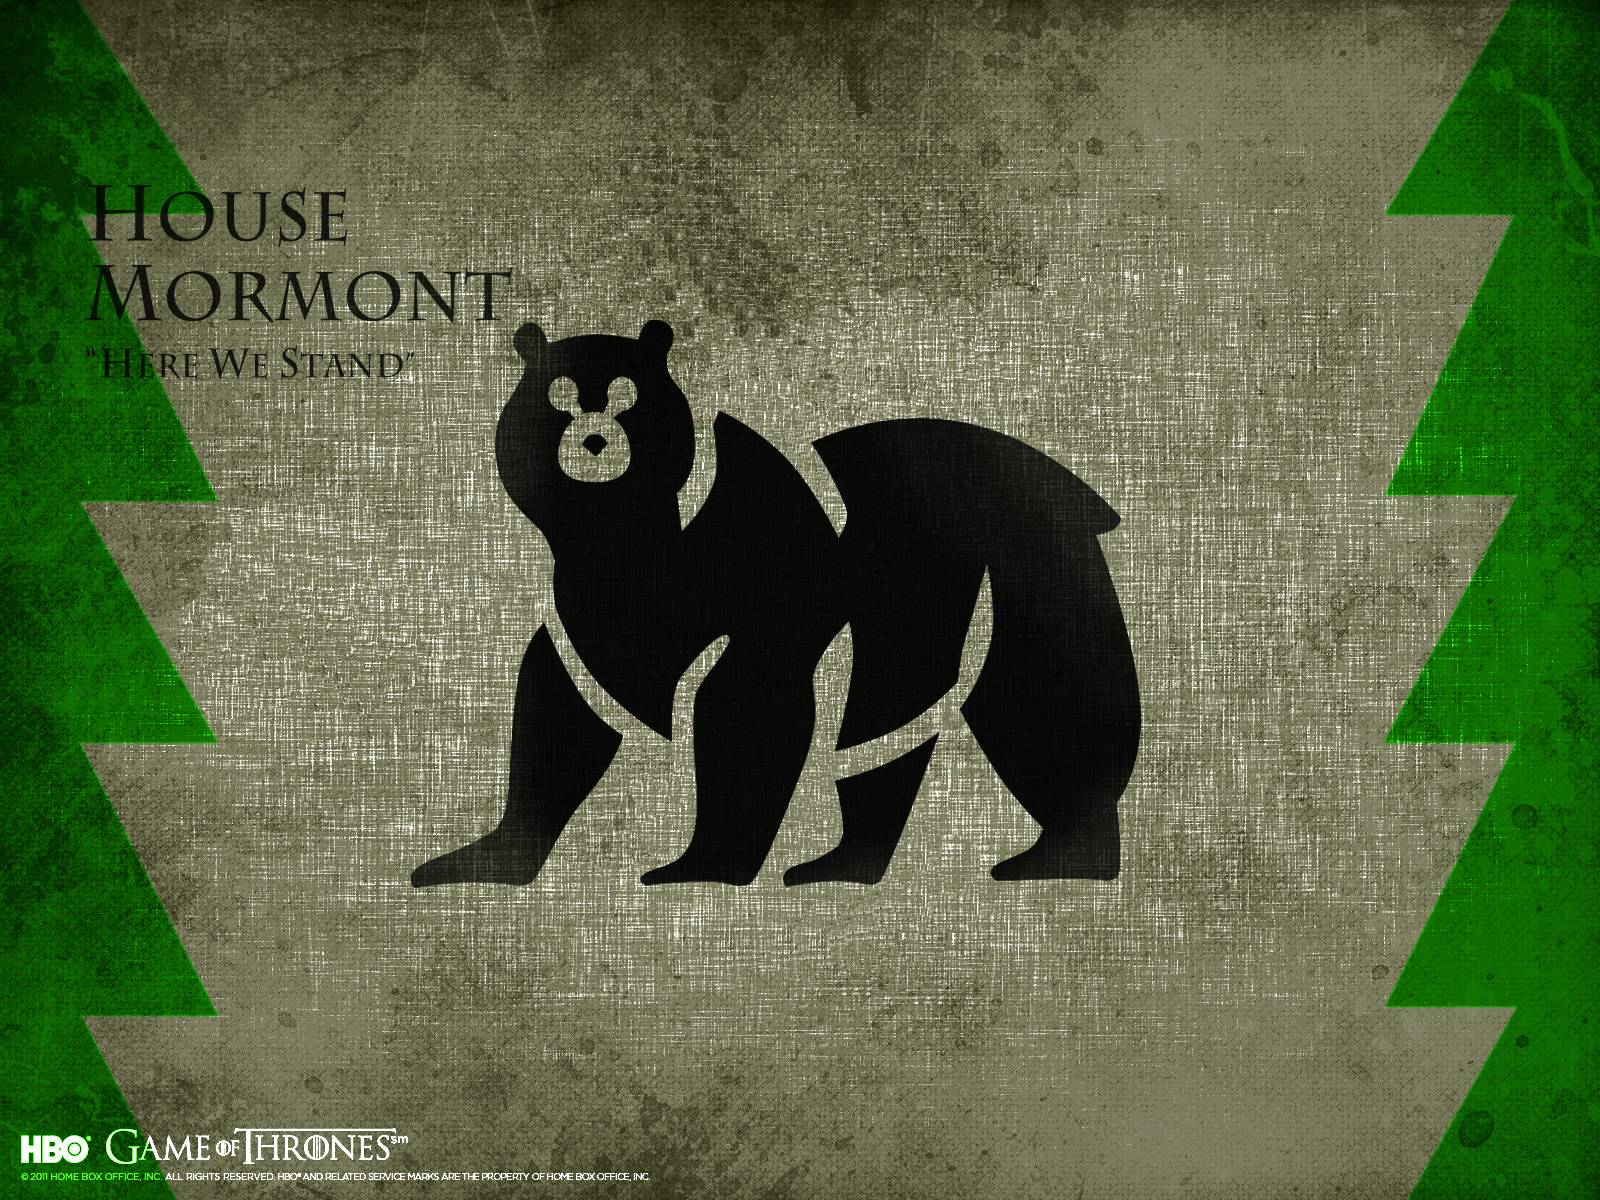 House Mormont of Thrones Wallpaper